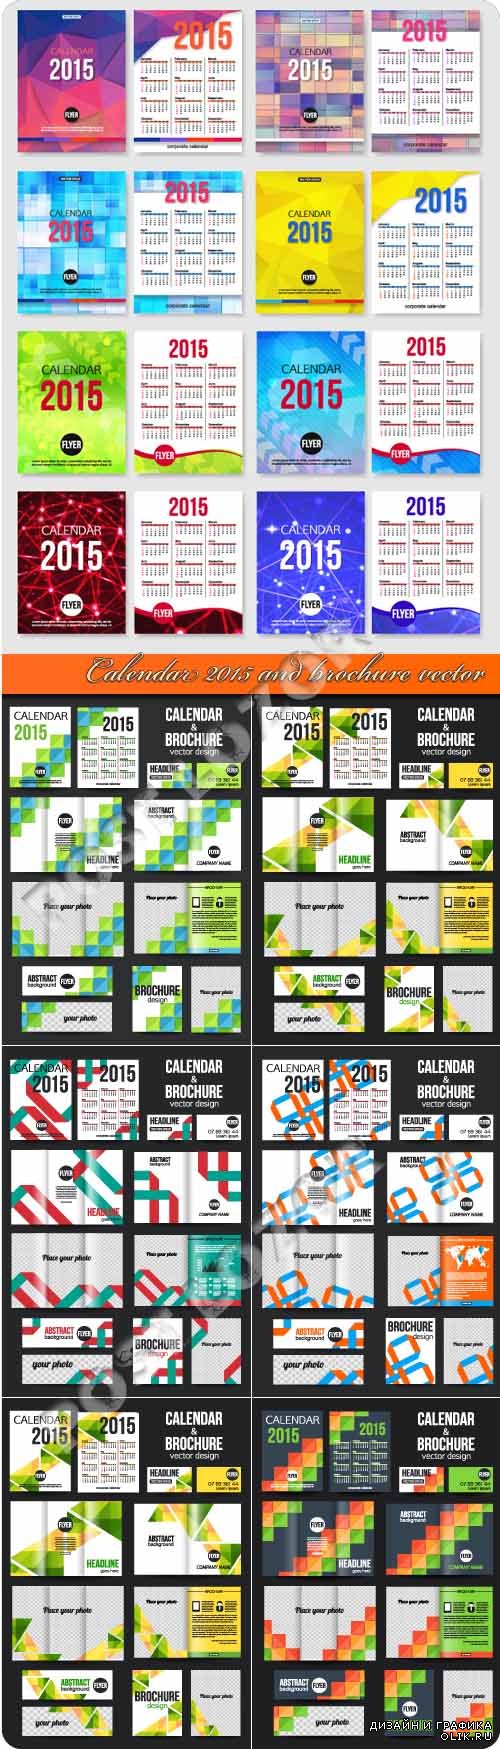 Calendar 2015 and brochure vector